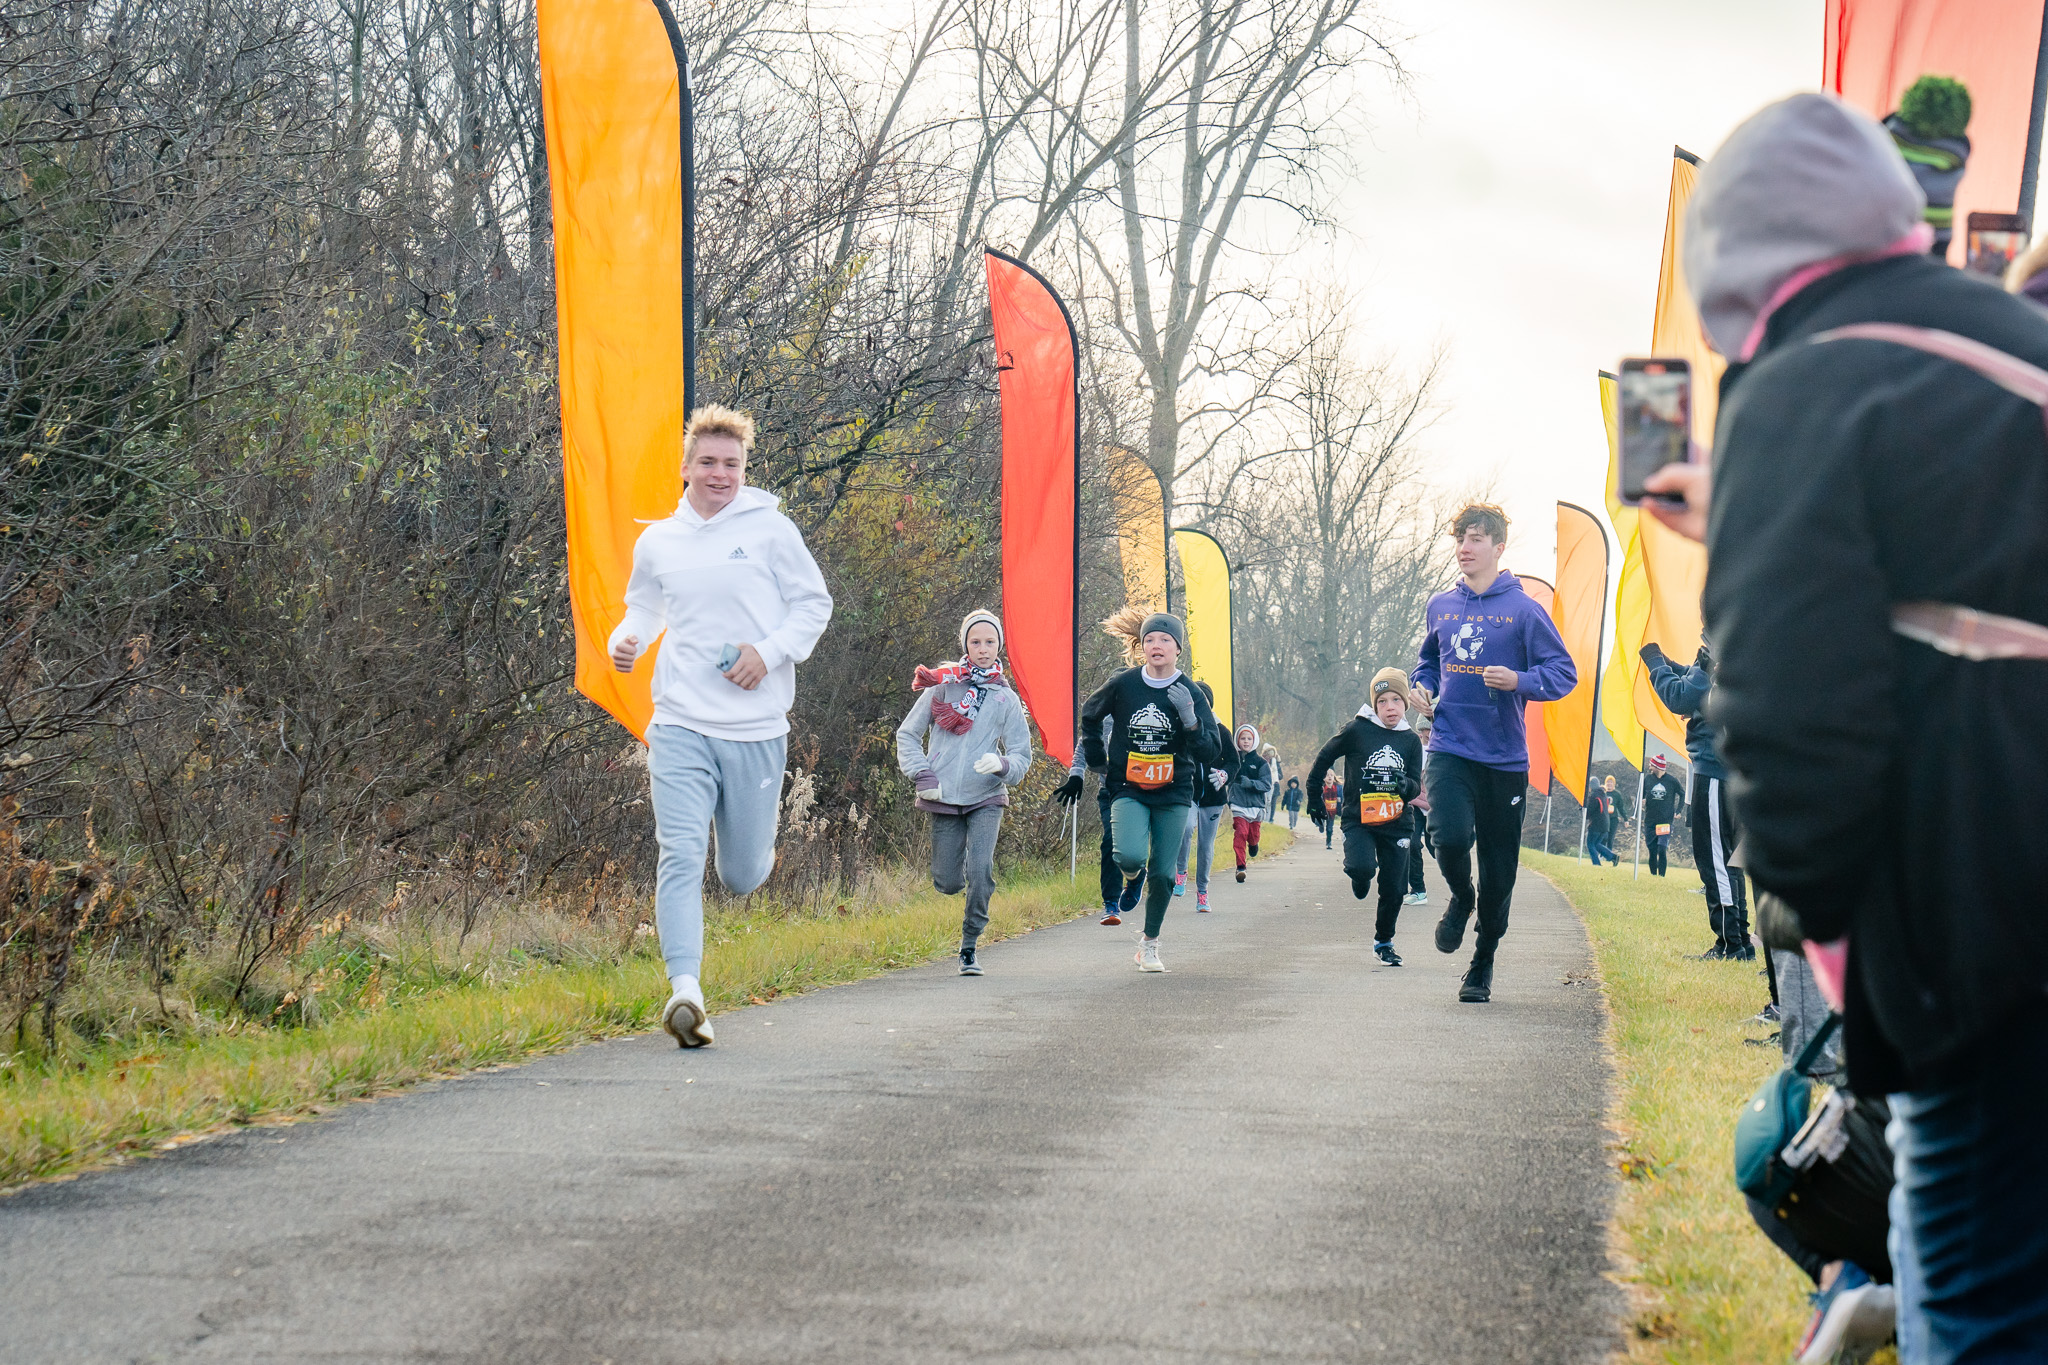 Ohio Turkey Trot Kids Dash and Fun Run Race Finishers - USA Race Timing & Event Management - The Premier Chip Timing Race Company In Ohio - Kids Fun Run, Kids Dash, 1 Mile, 5k, 5mi, 10k, 1/2 Marathon, Marathon